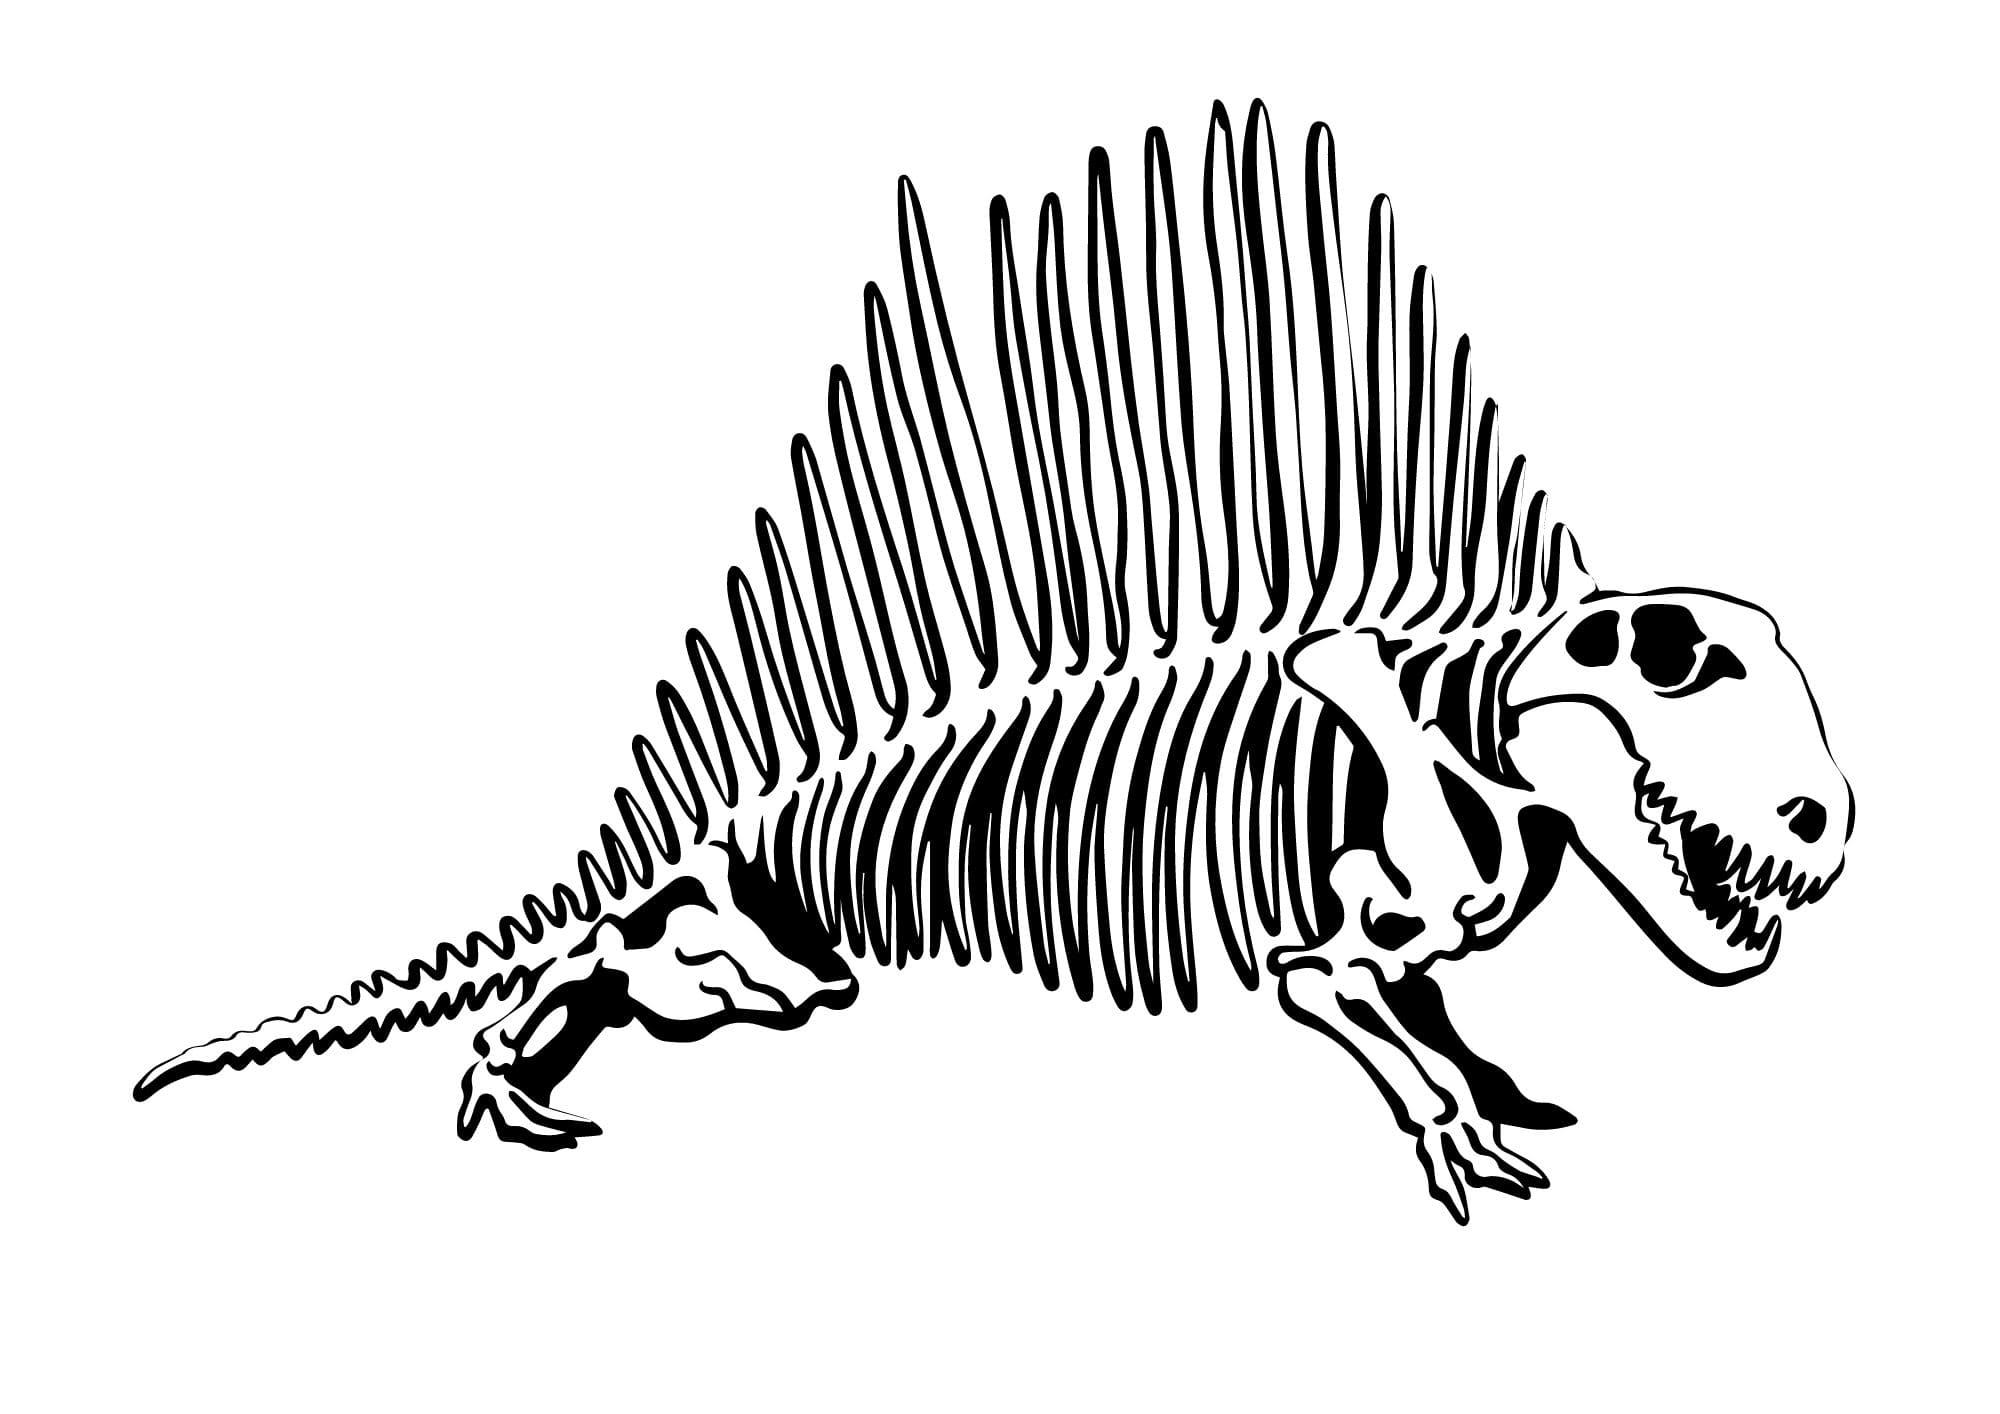 Dimetrodon pictures to color (Free + Printable)